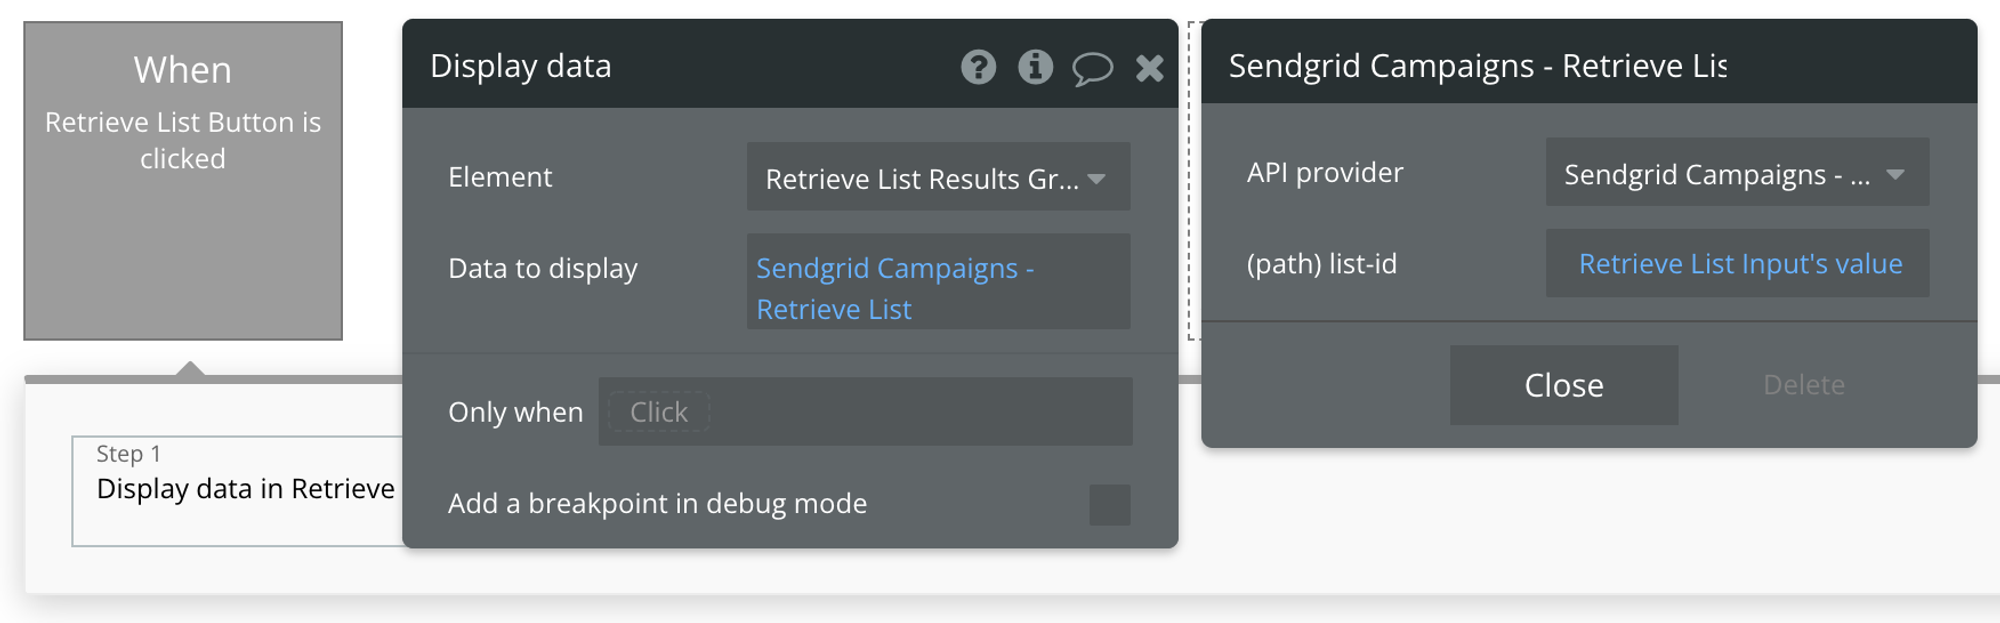 Select Sendgrid Campaign - Retrieve List from the API provider dropdown